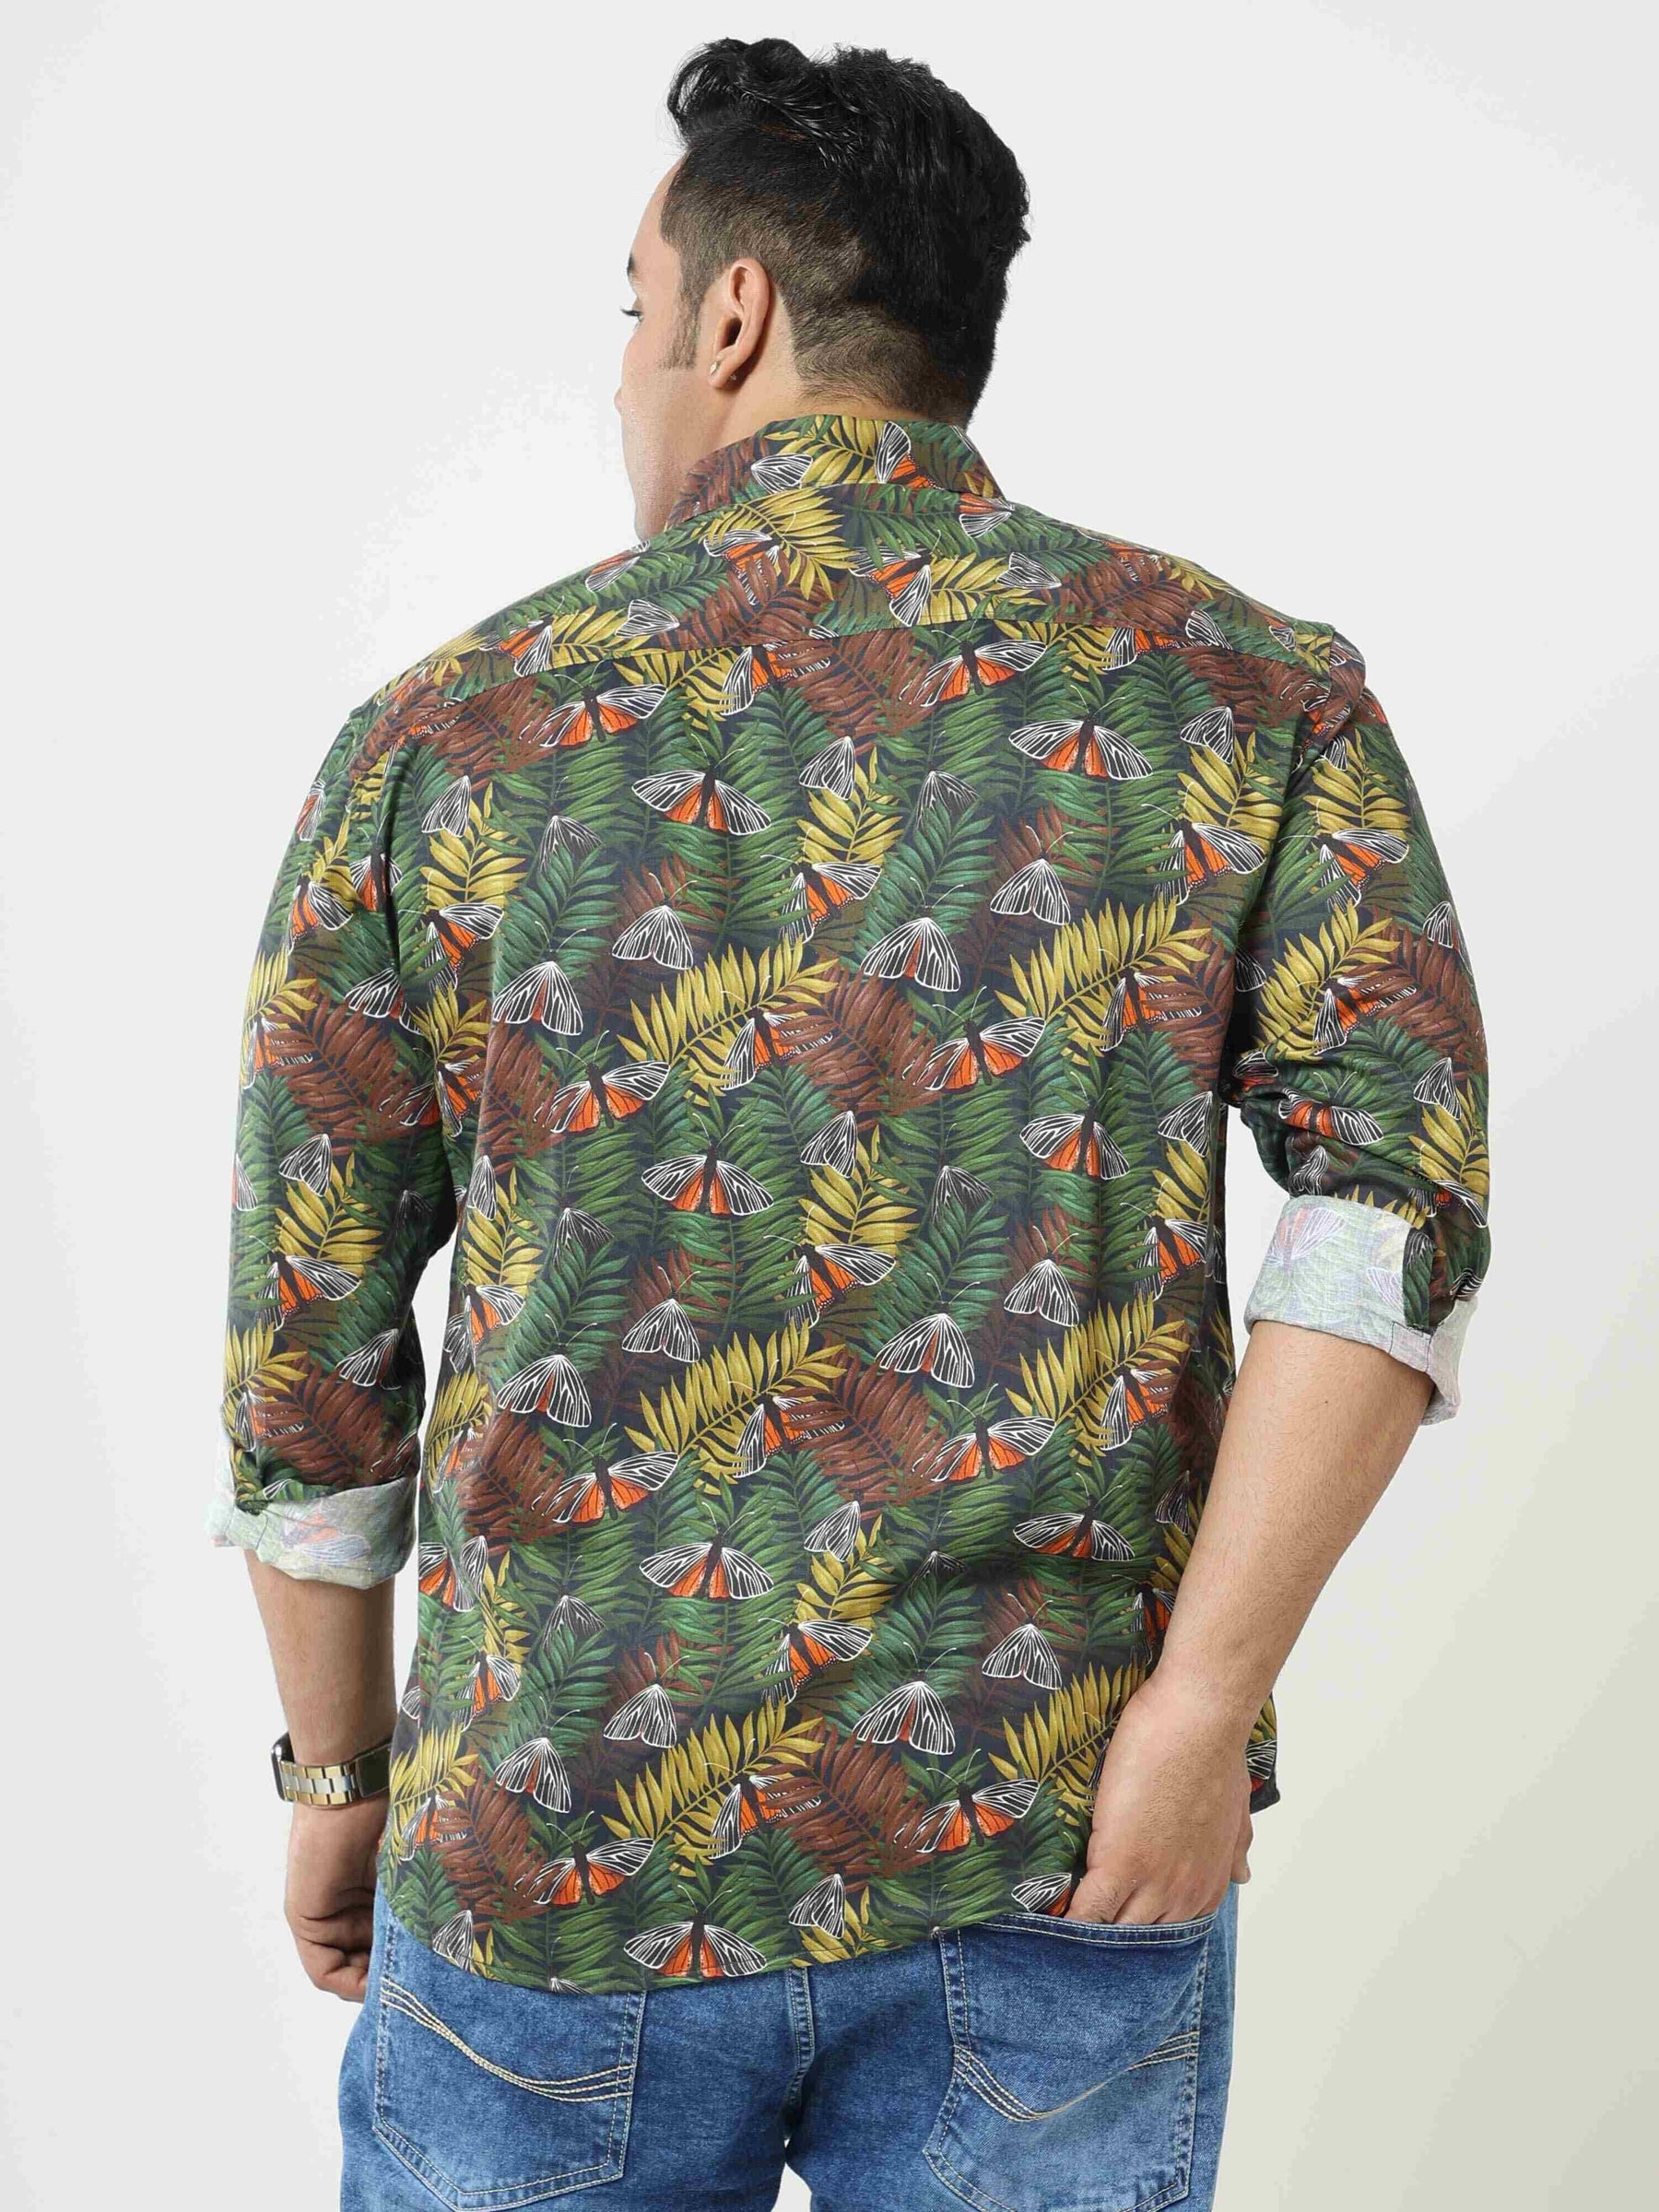 OAK Leaf Butterfly Printed Cotton Full Shirt Men's Plus Size - Guniaa Fashions